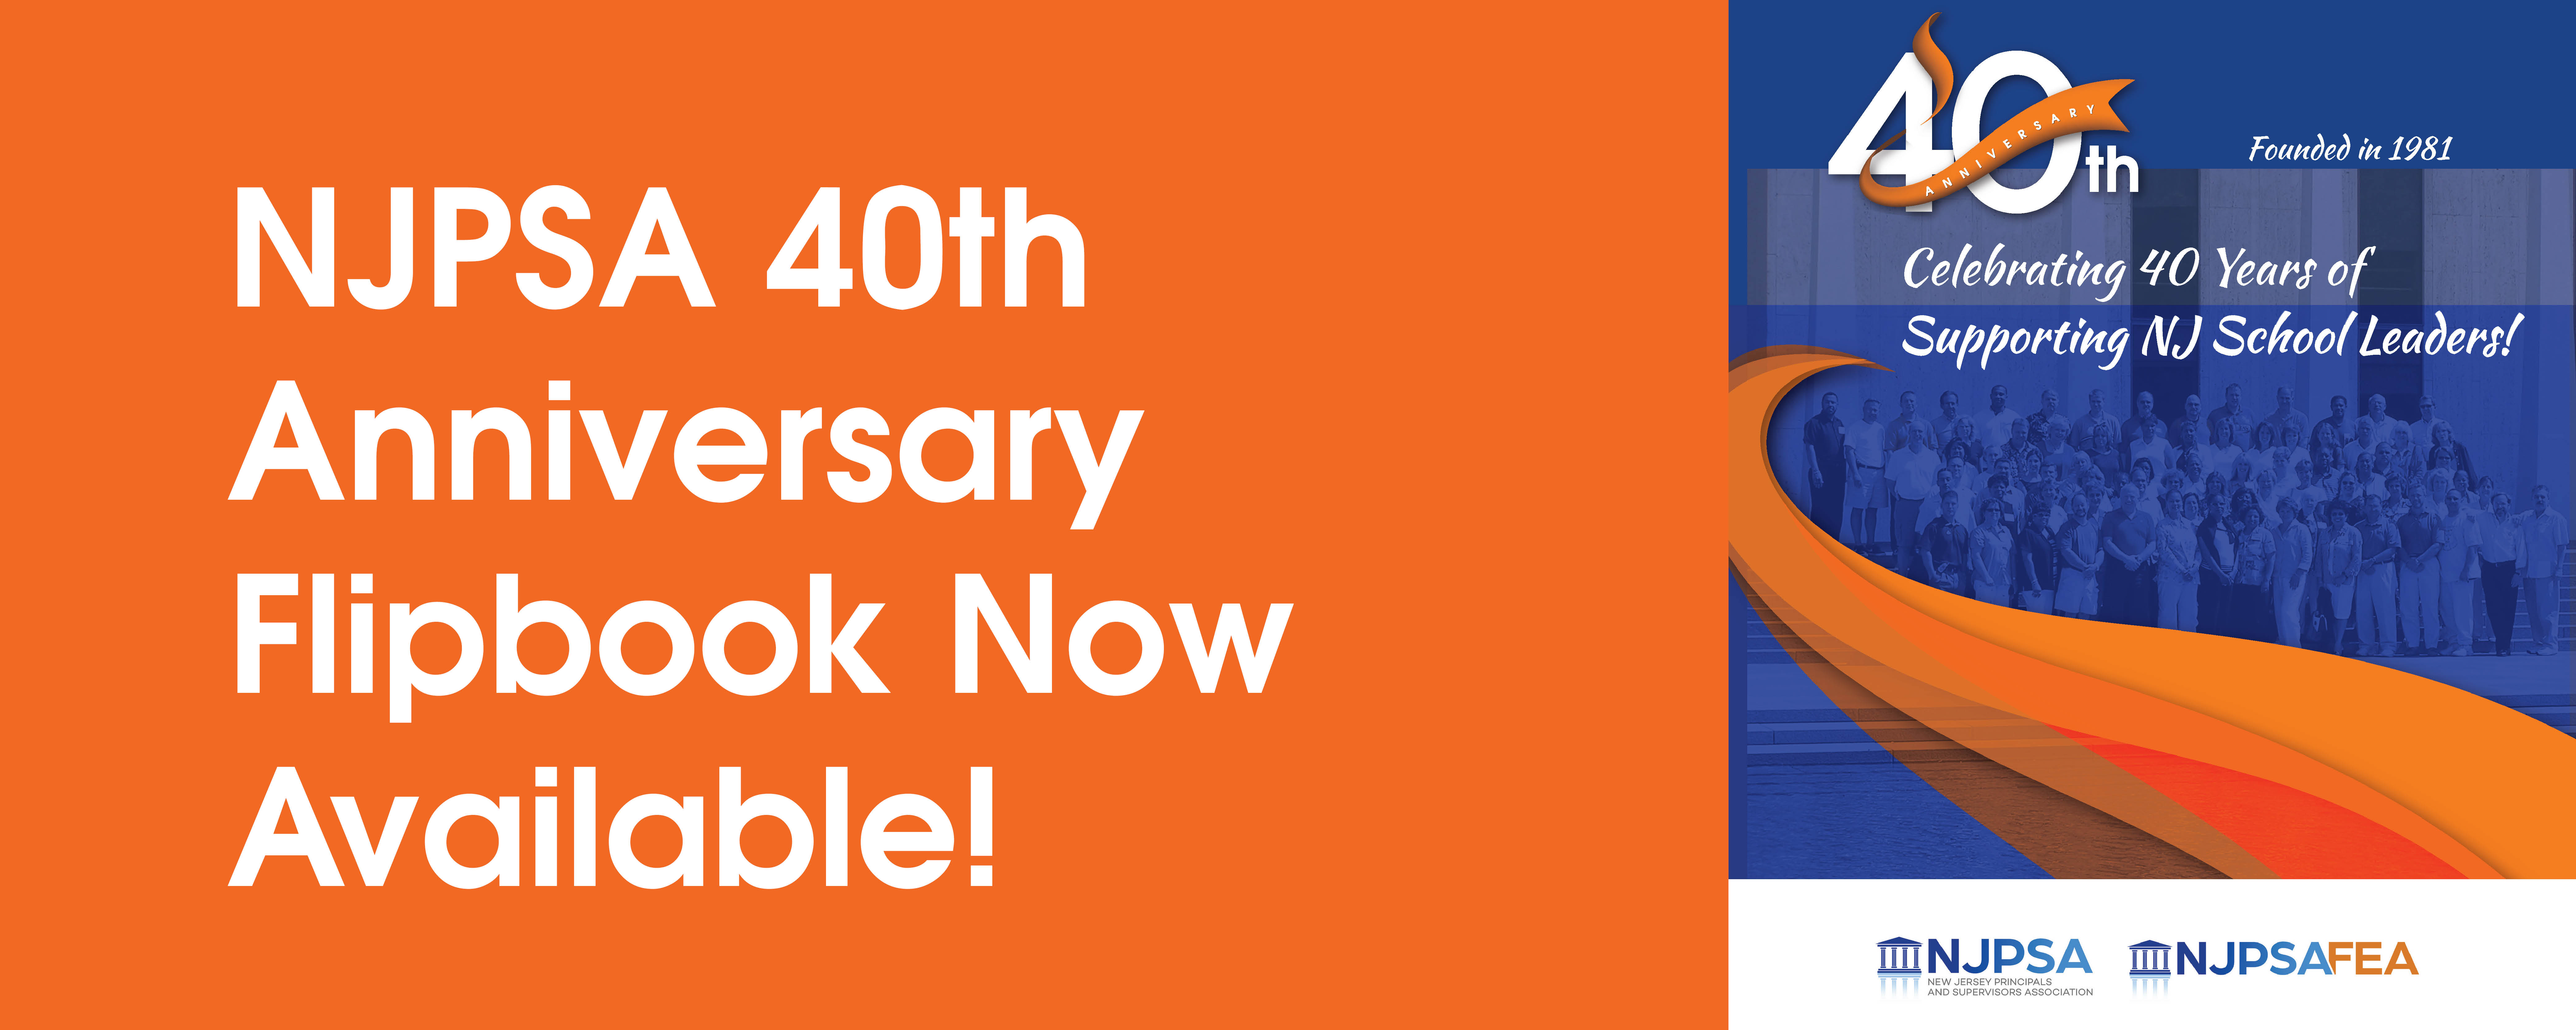 Celebrating 40 years of NJPSA